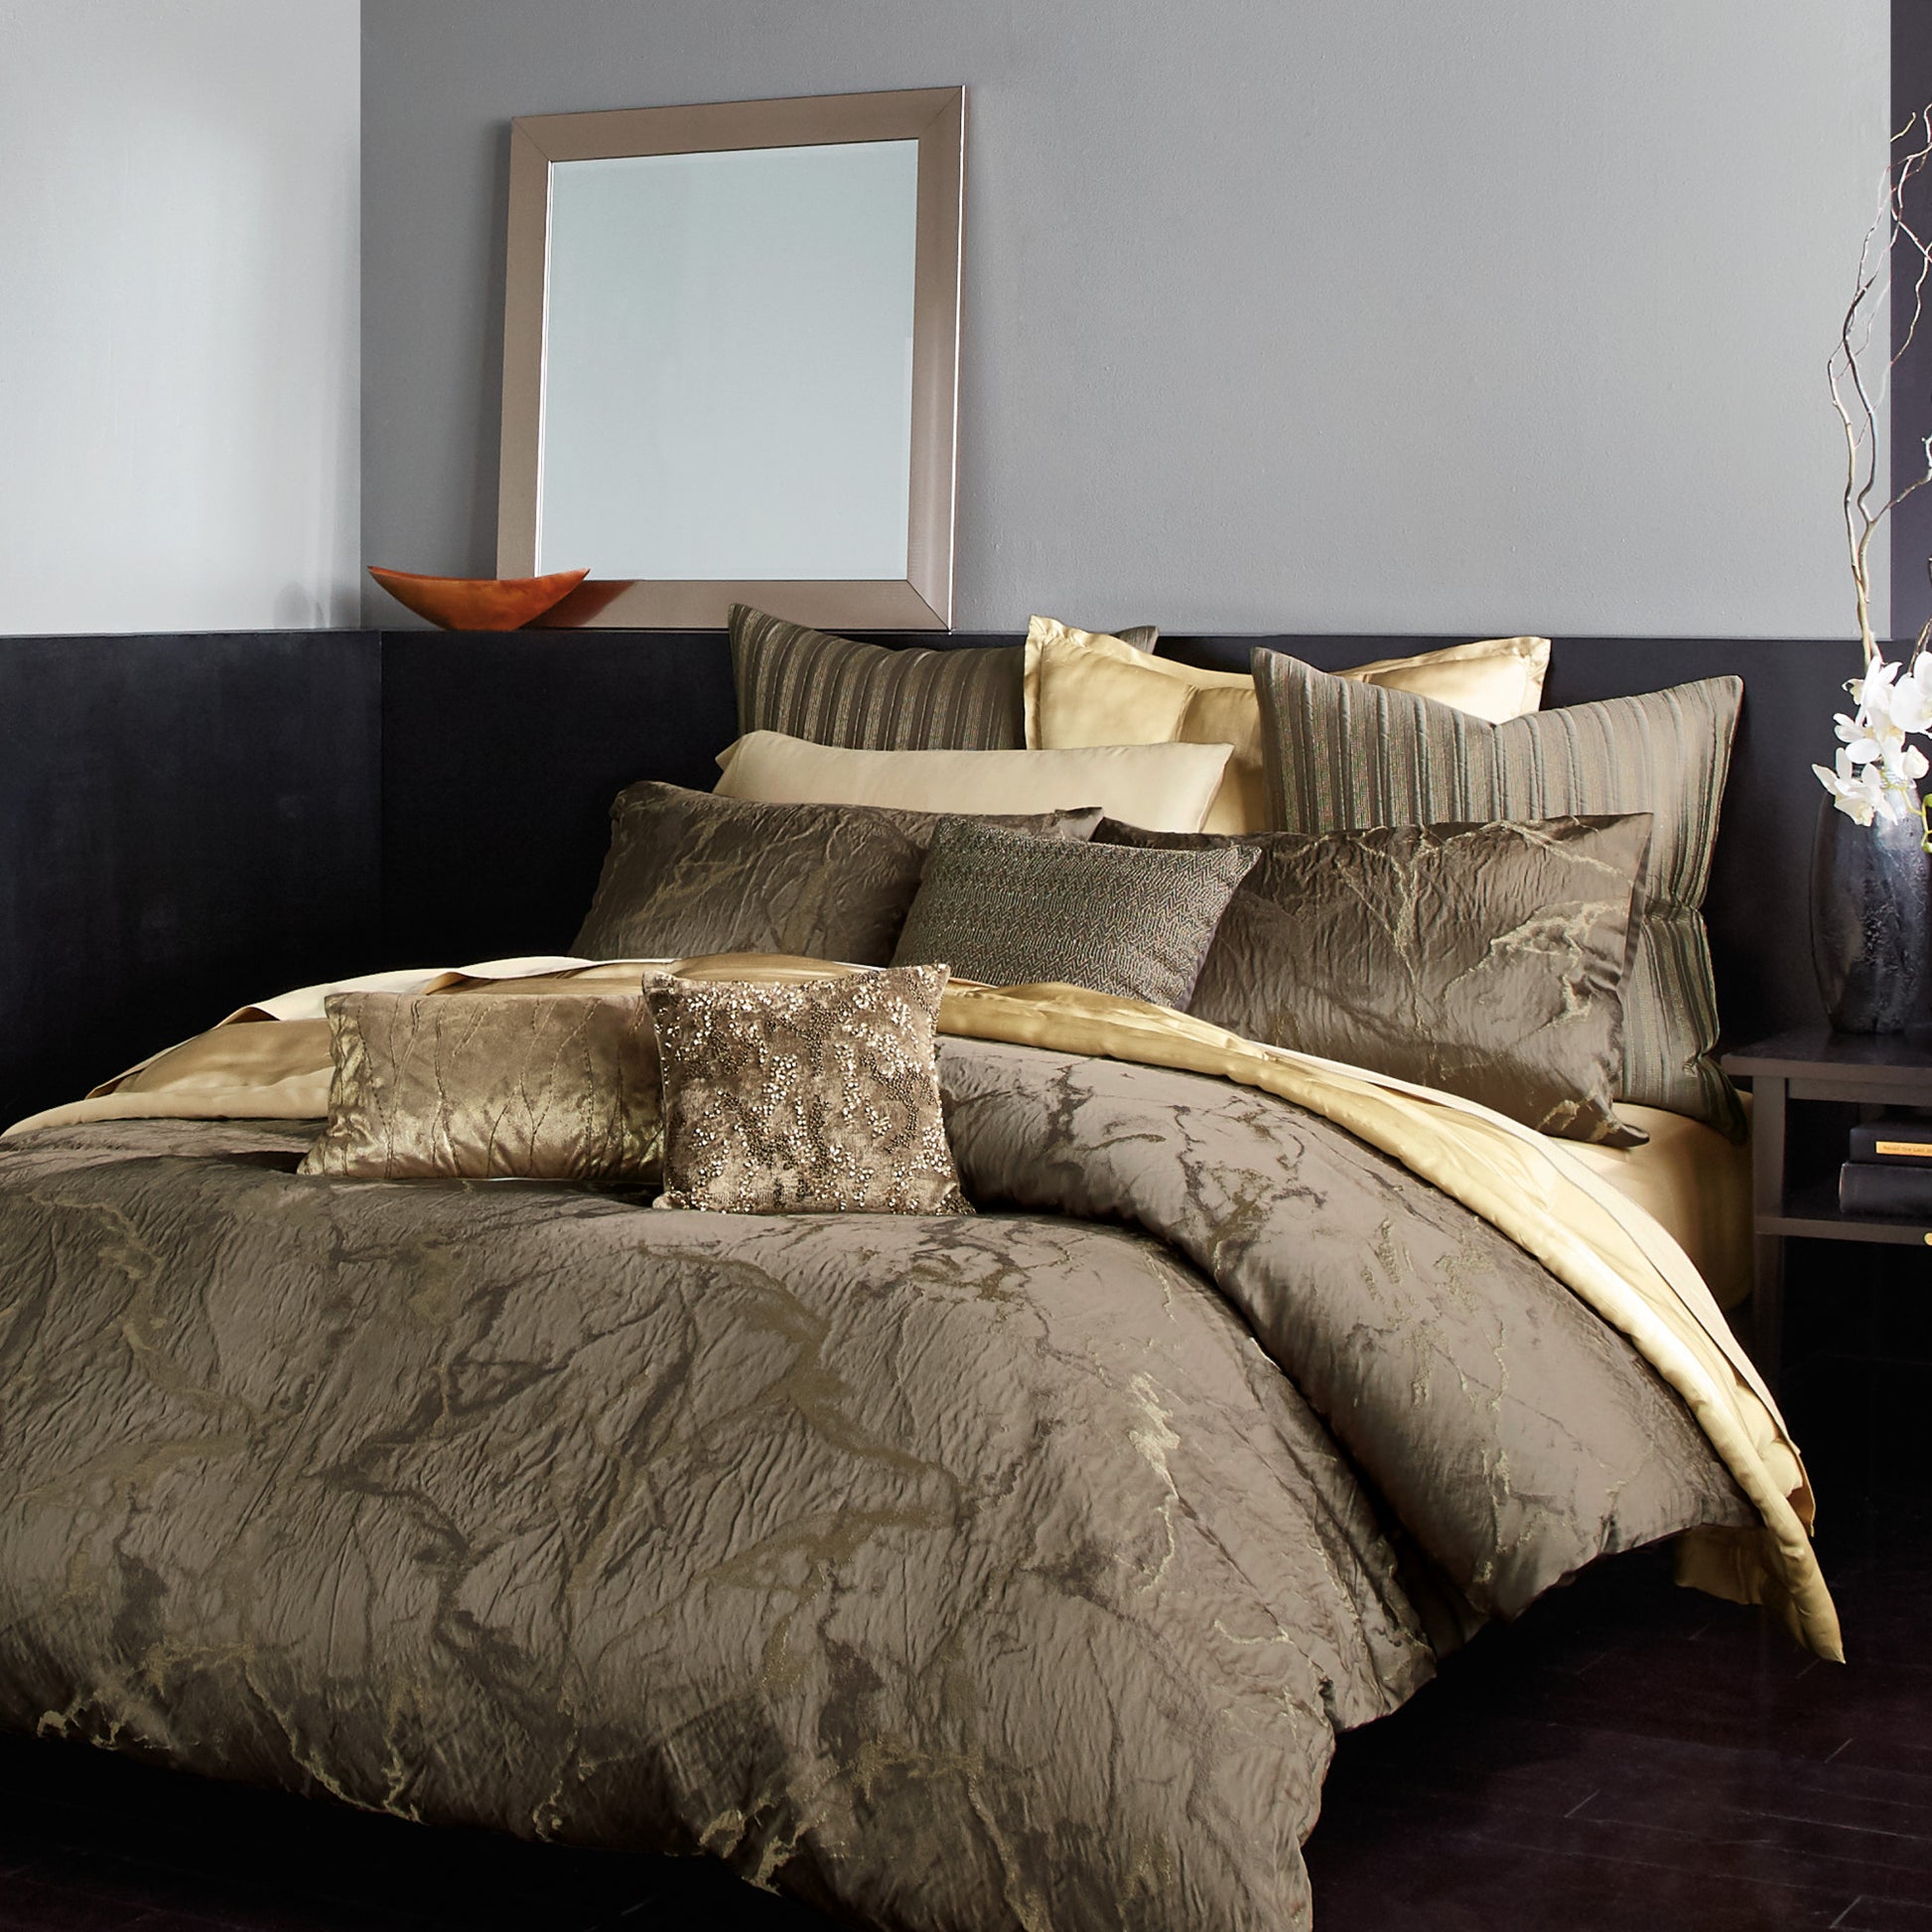 Donna Karan Sanctuary Velvet Texture Decorative Pillows